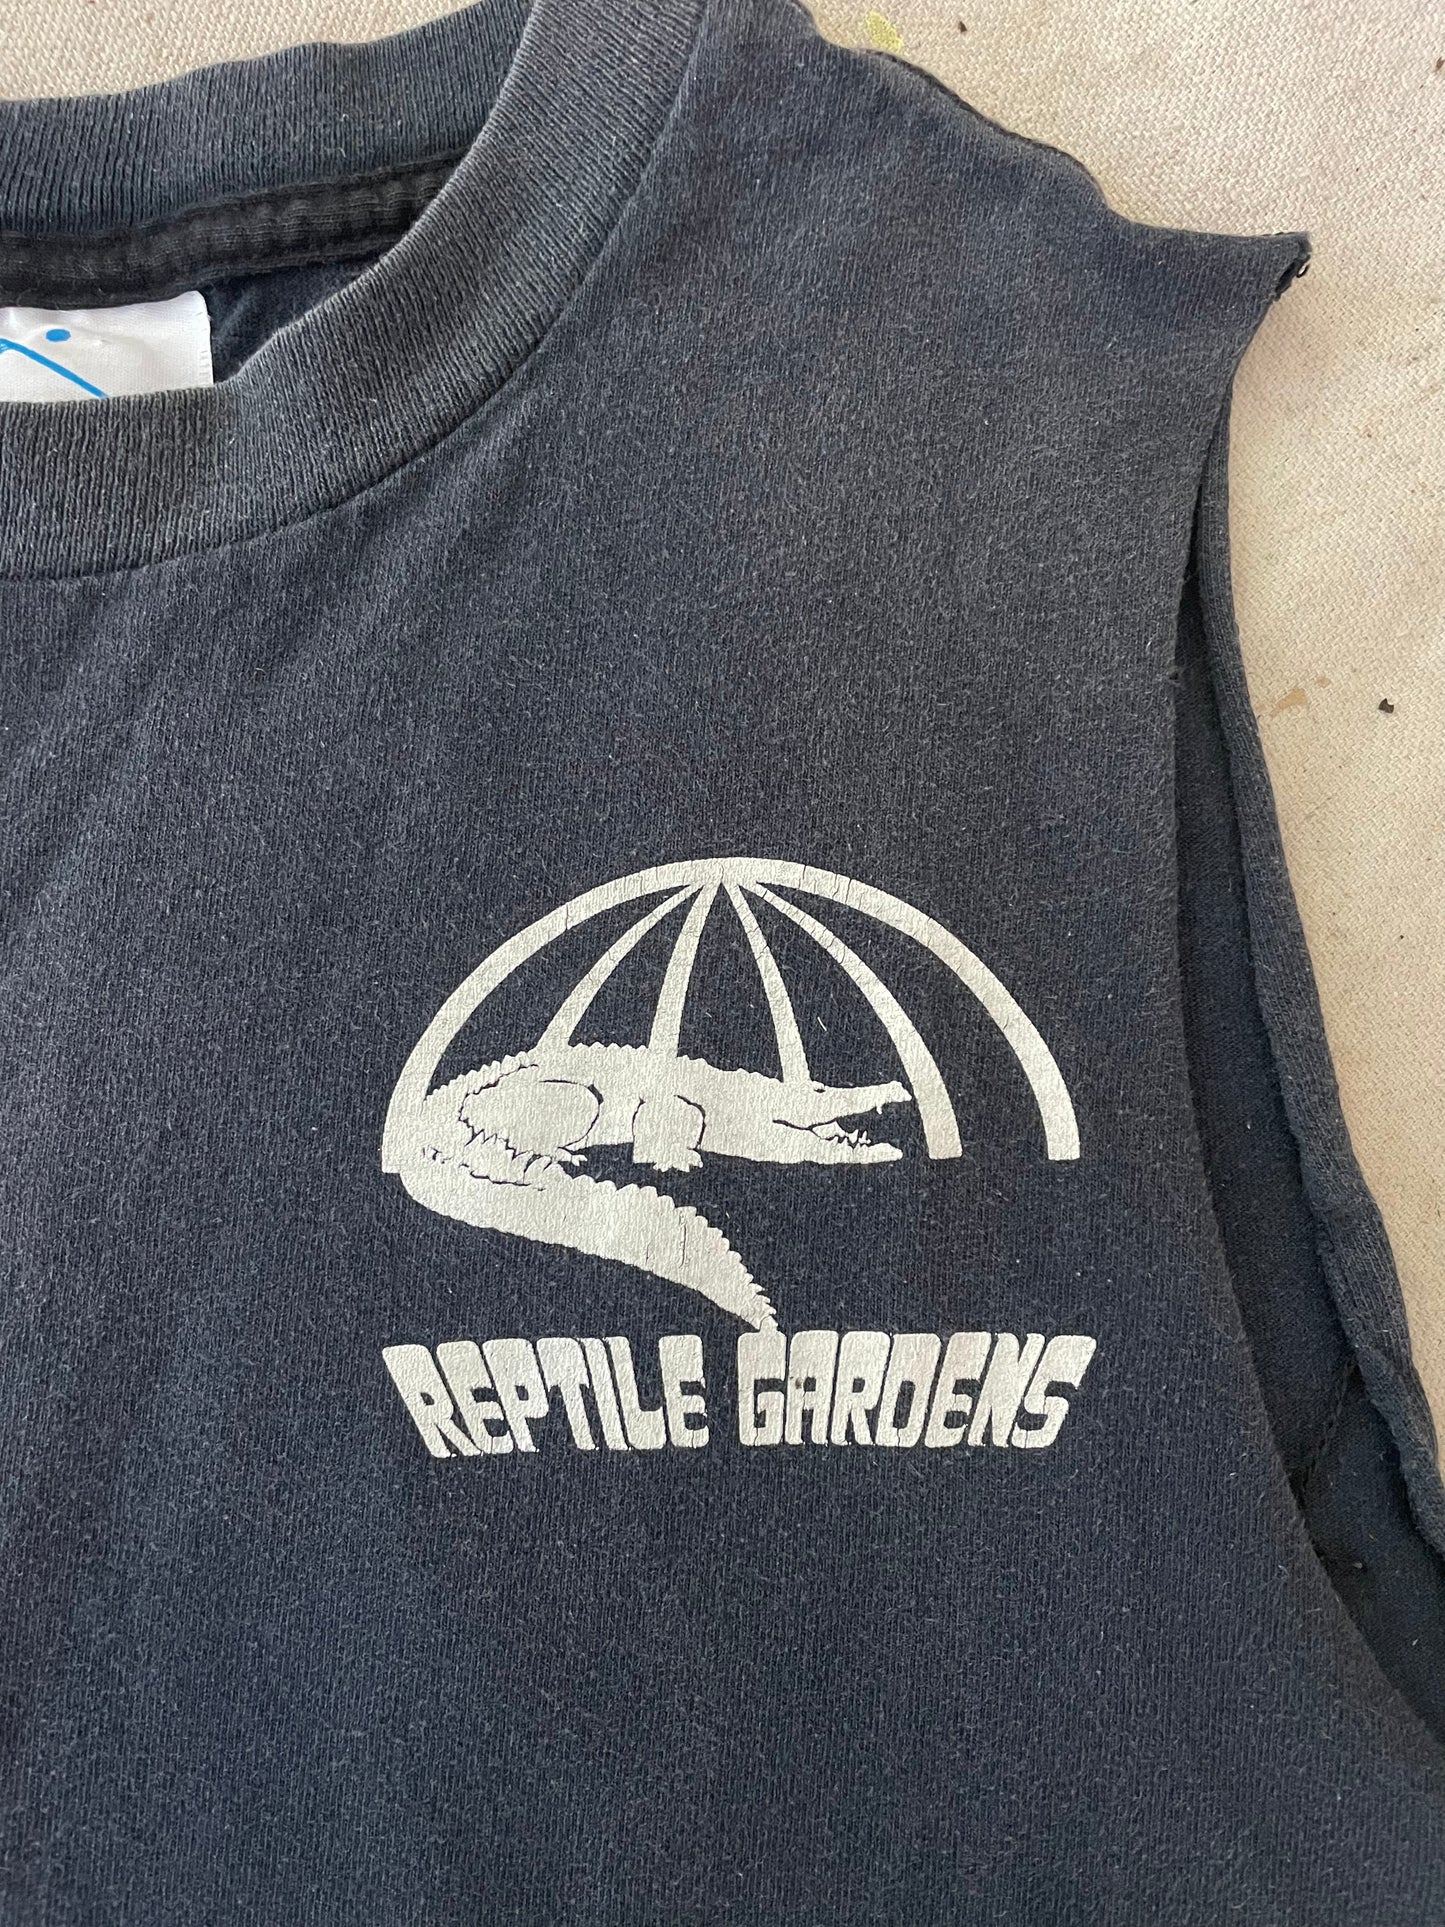 80s Go Wrestle A Gator Reptile Gardens Cut-off Tank Top